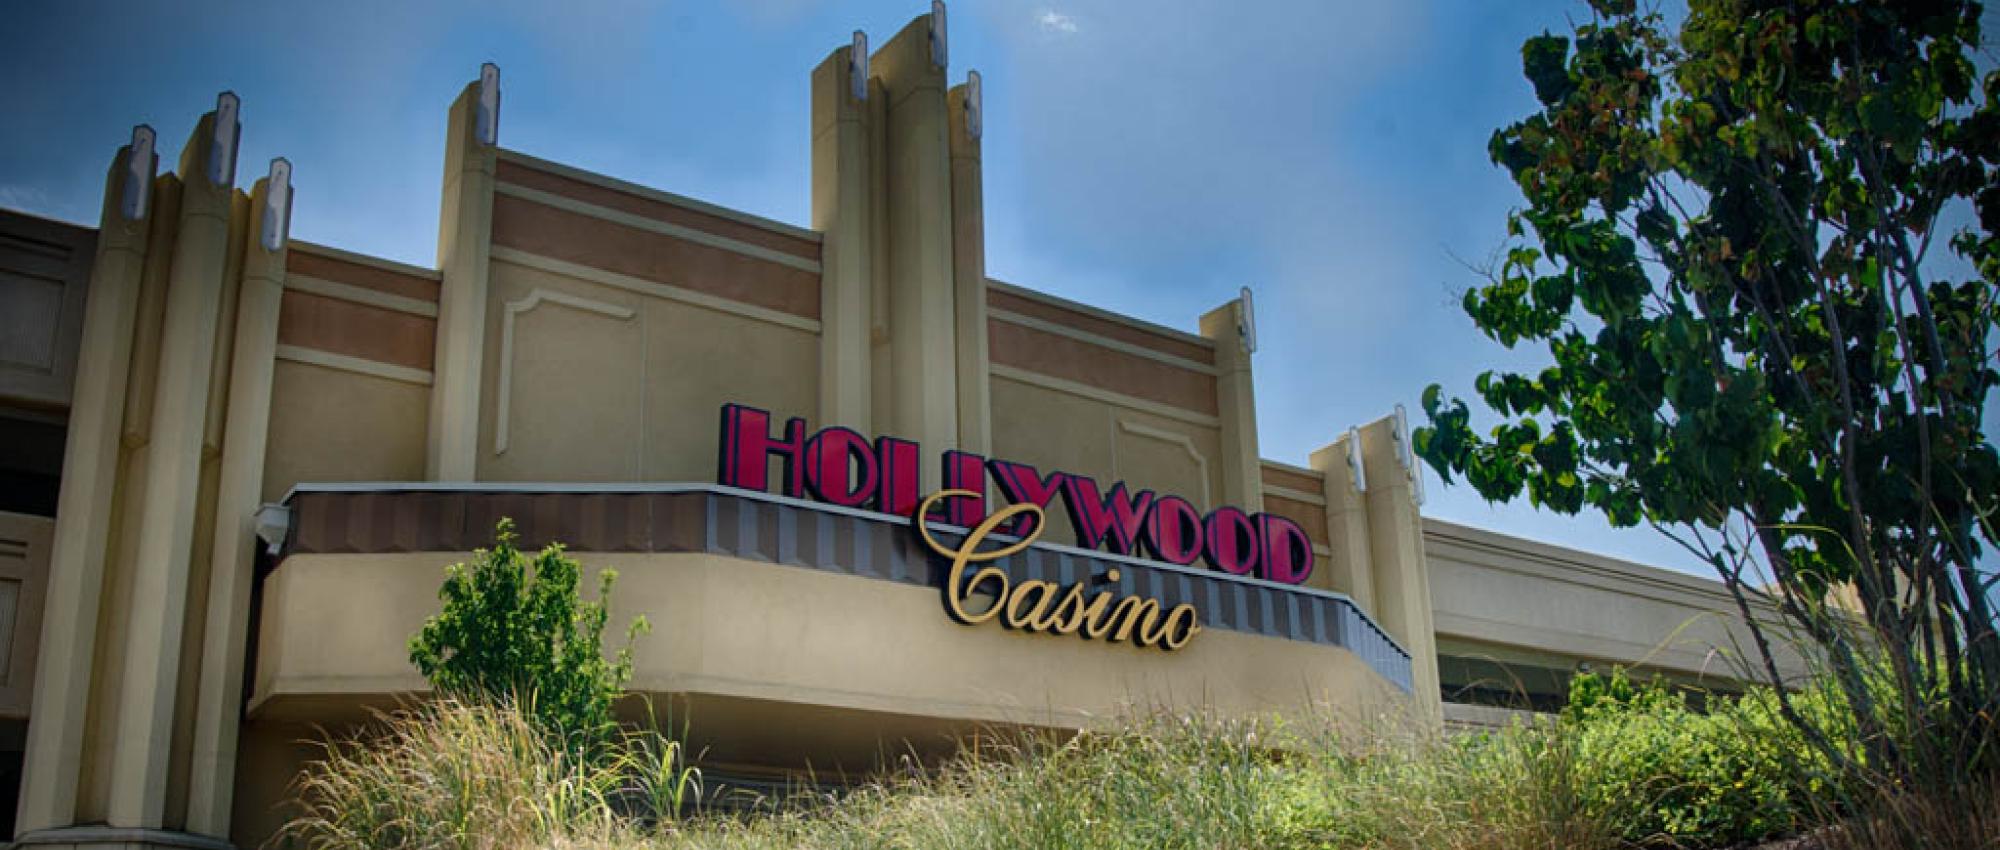 hollywood casino my choice